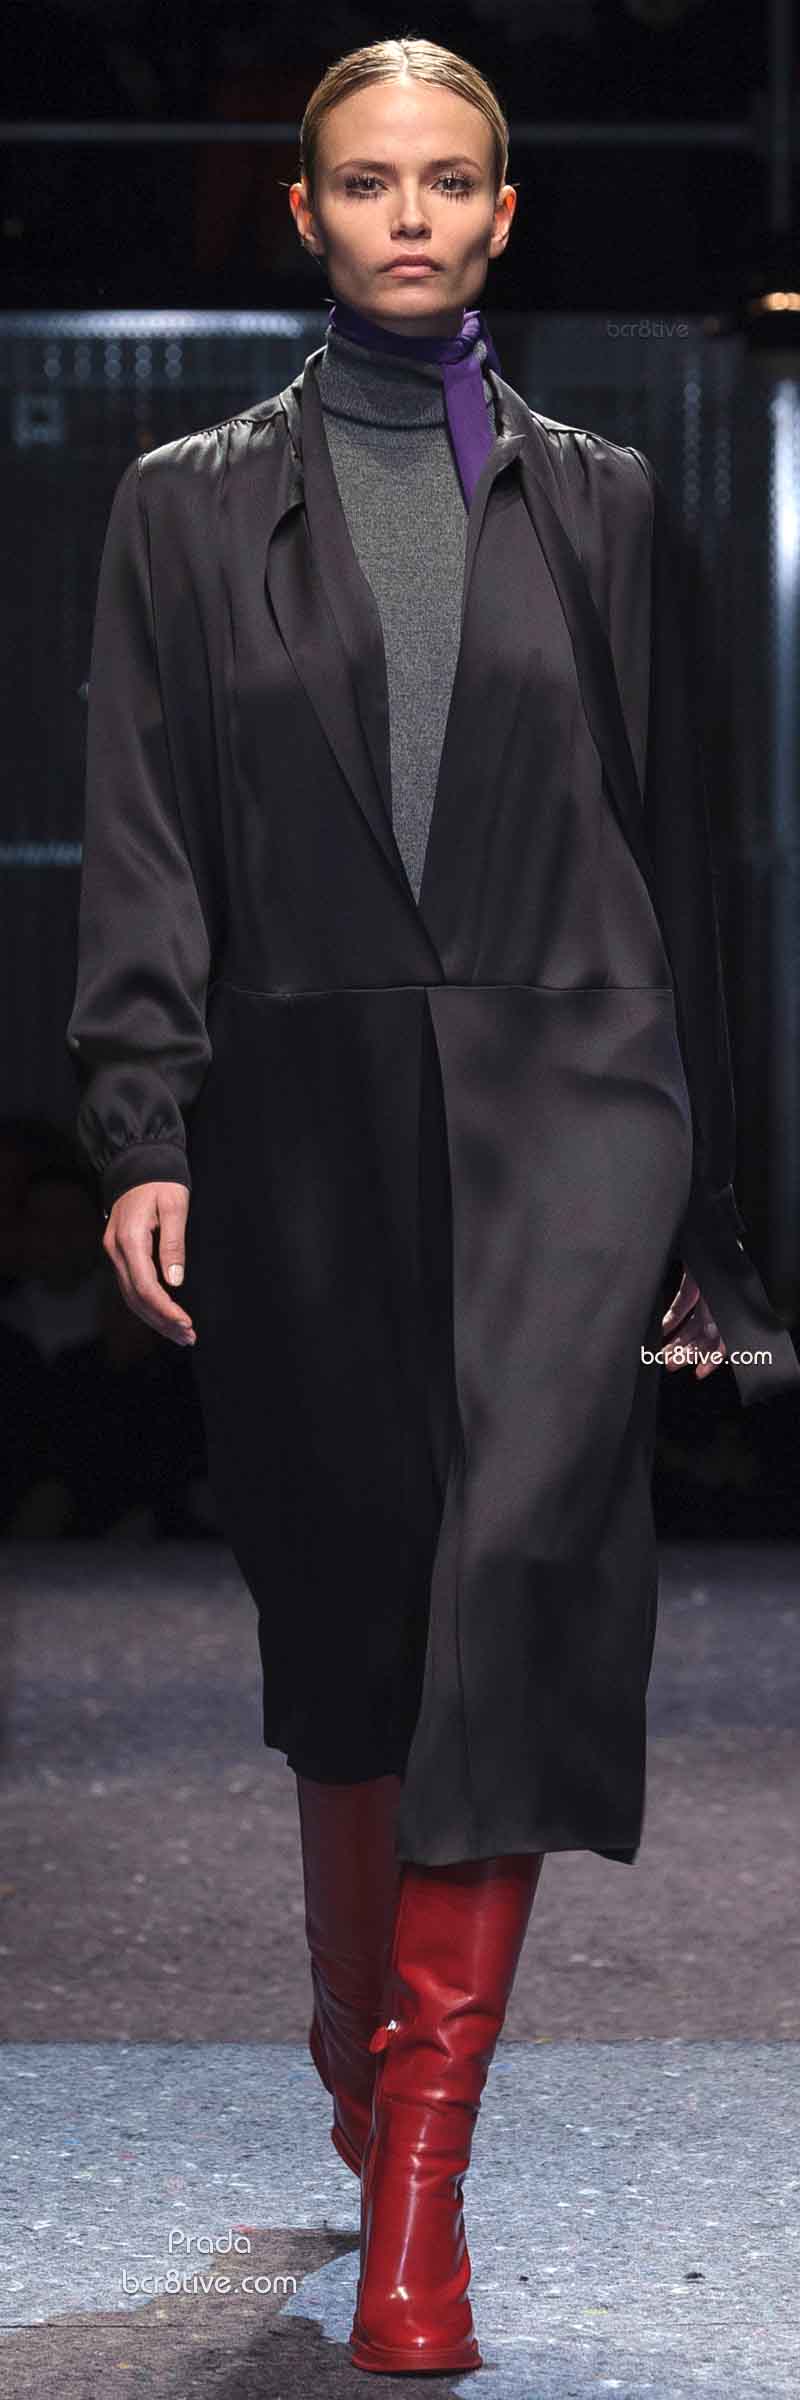 Fall 2014 Menswear Inspired Fashion - Prada